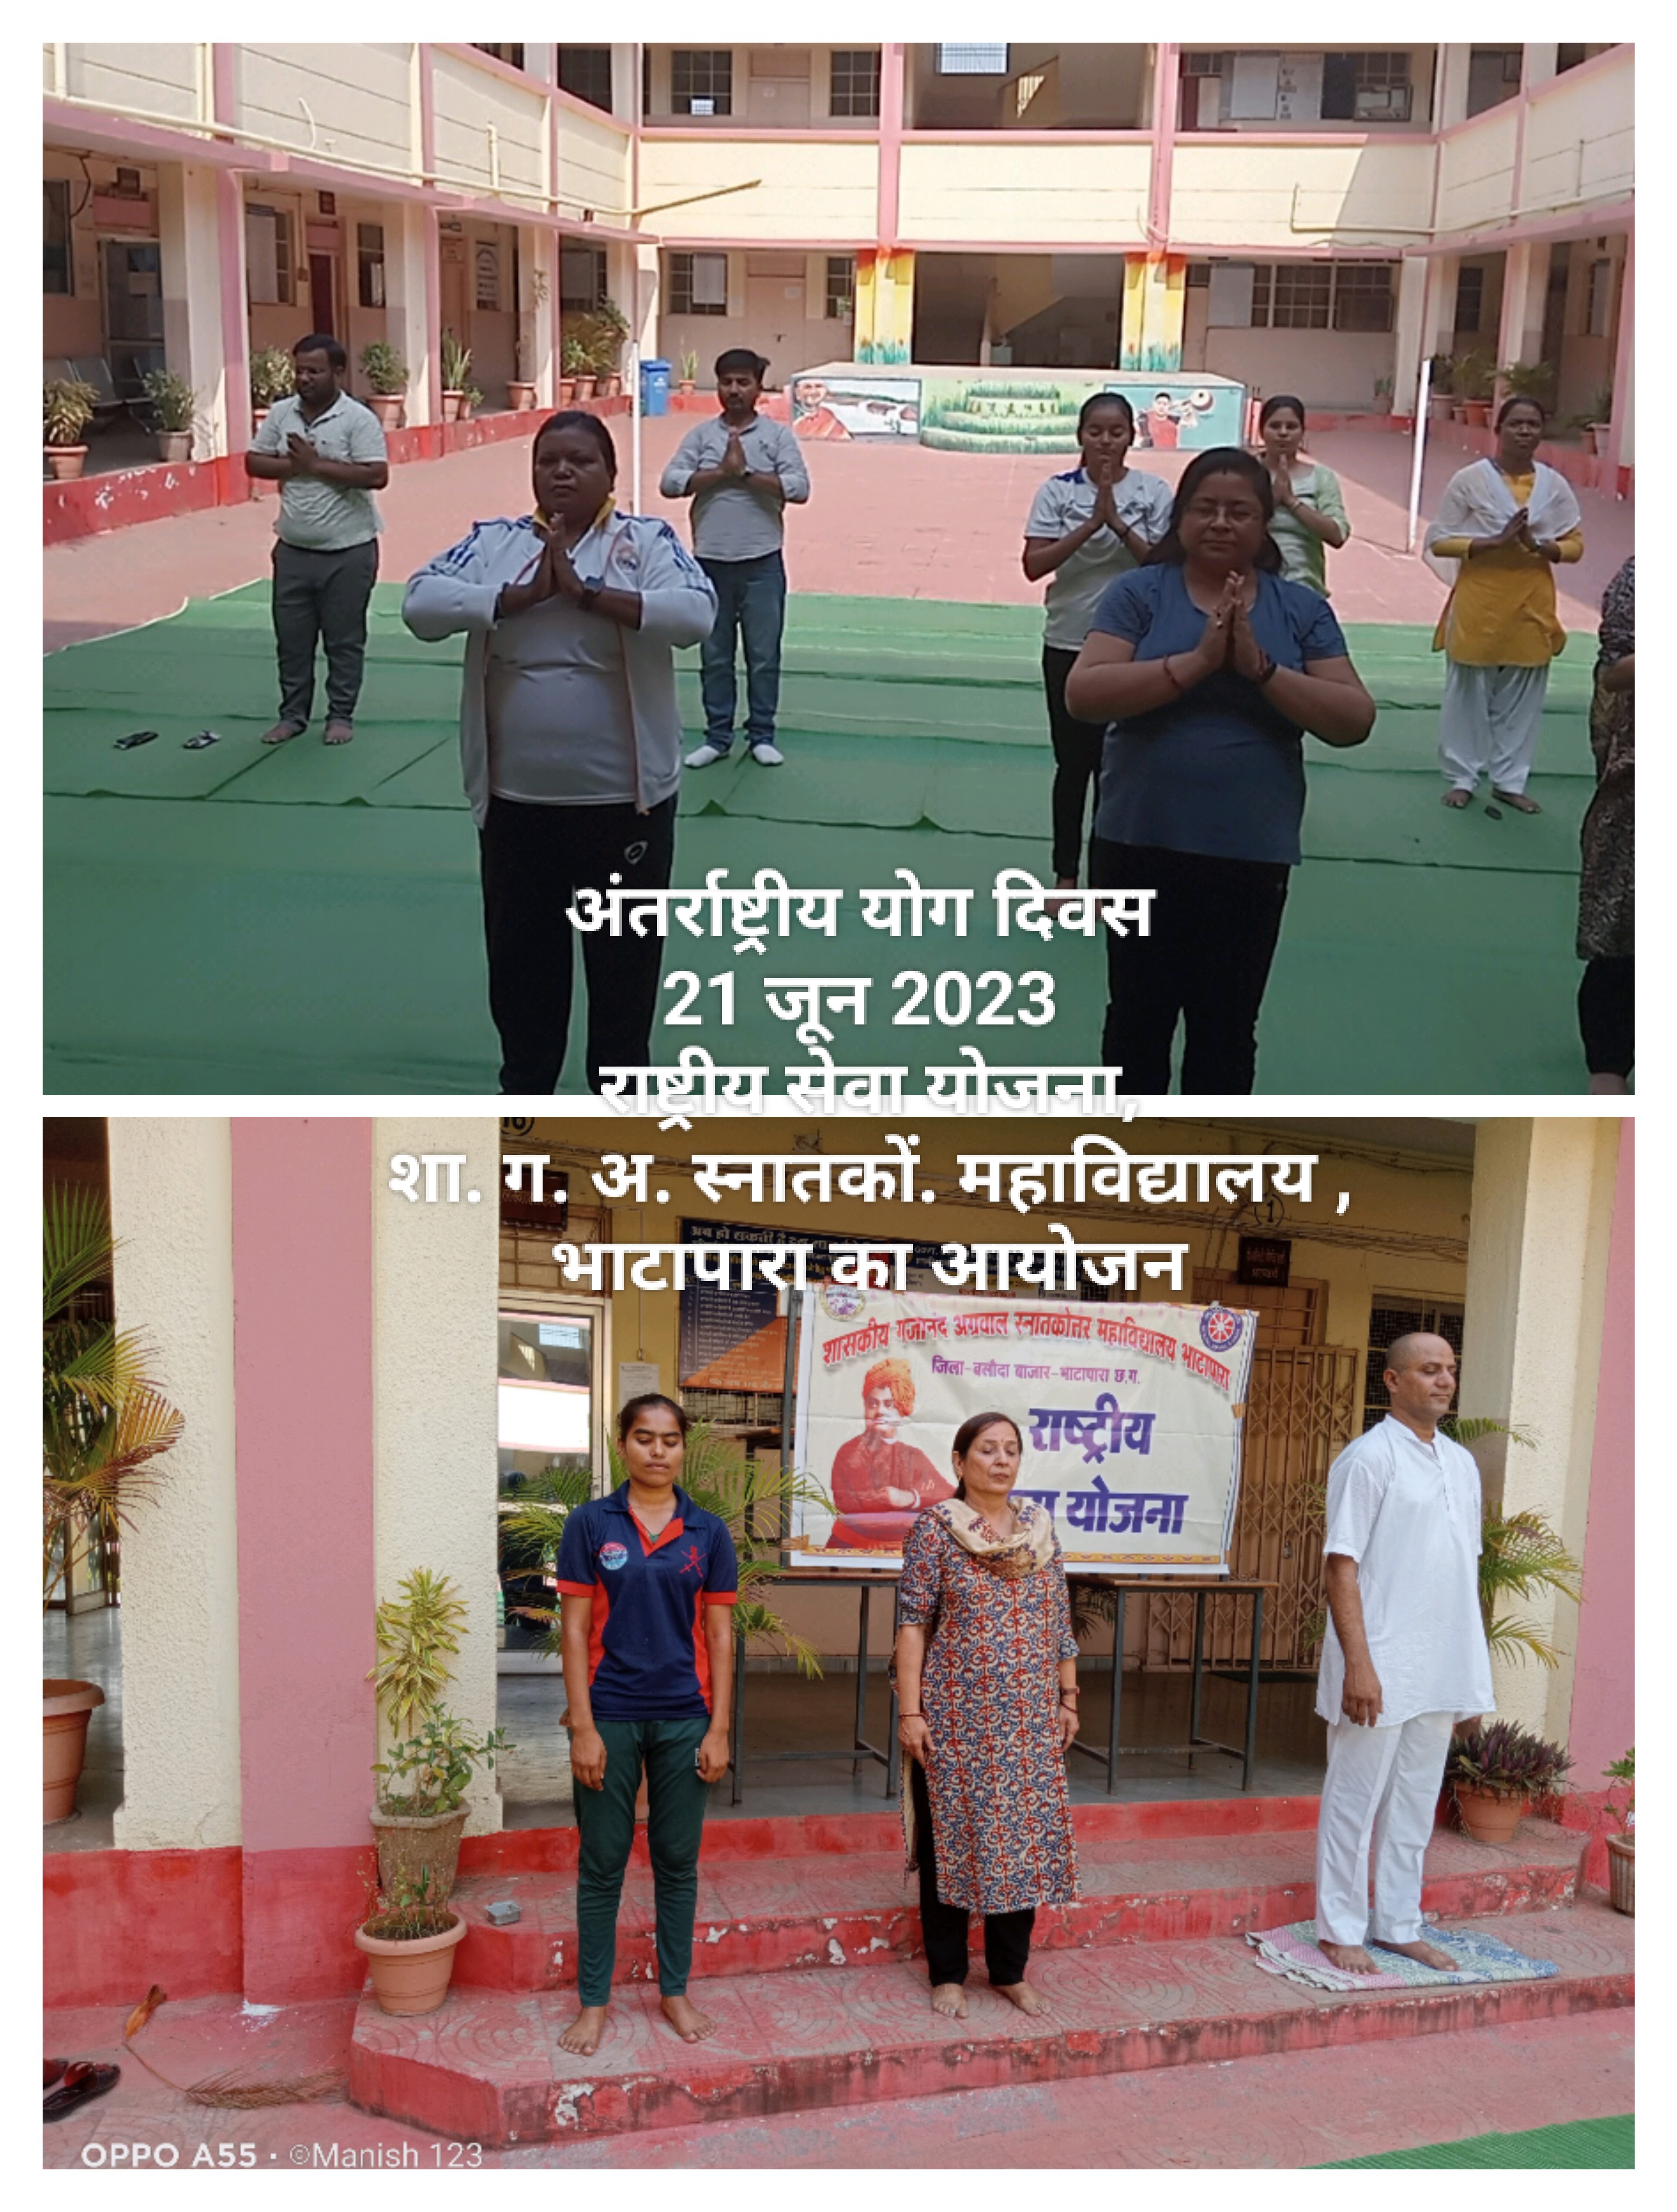 Govt. G. N. A. P.G. College, Bhatapara | Govt. College Bhatapara-अंतर्राष्ट्रीय योग दिवस 2023